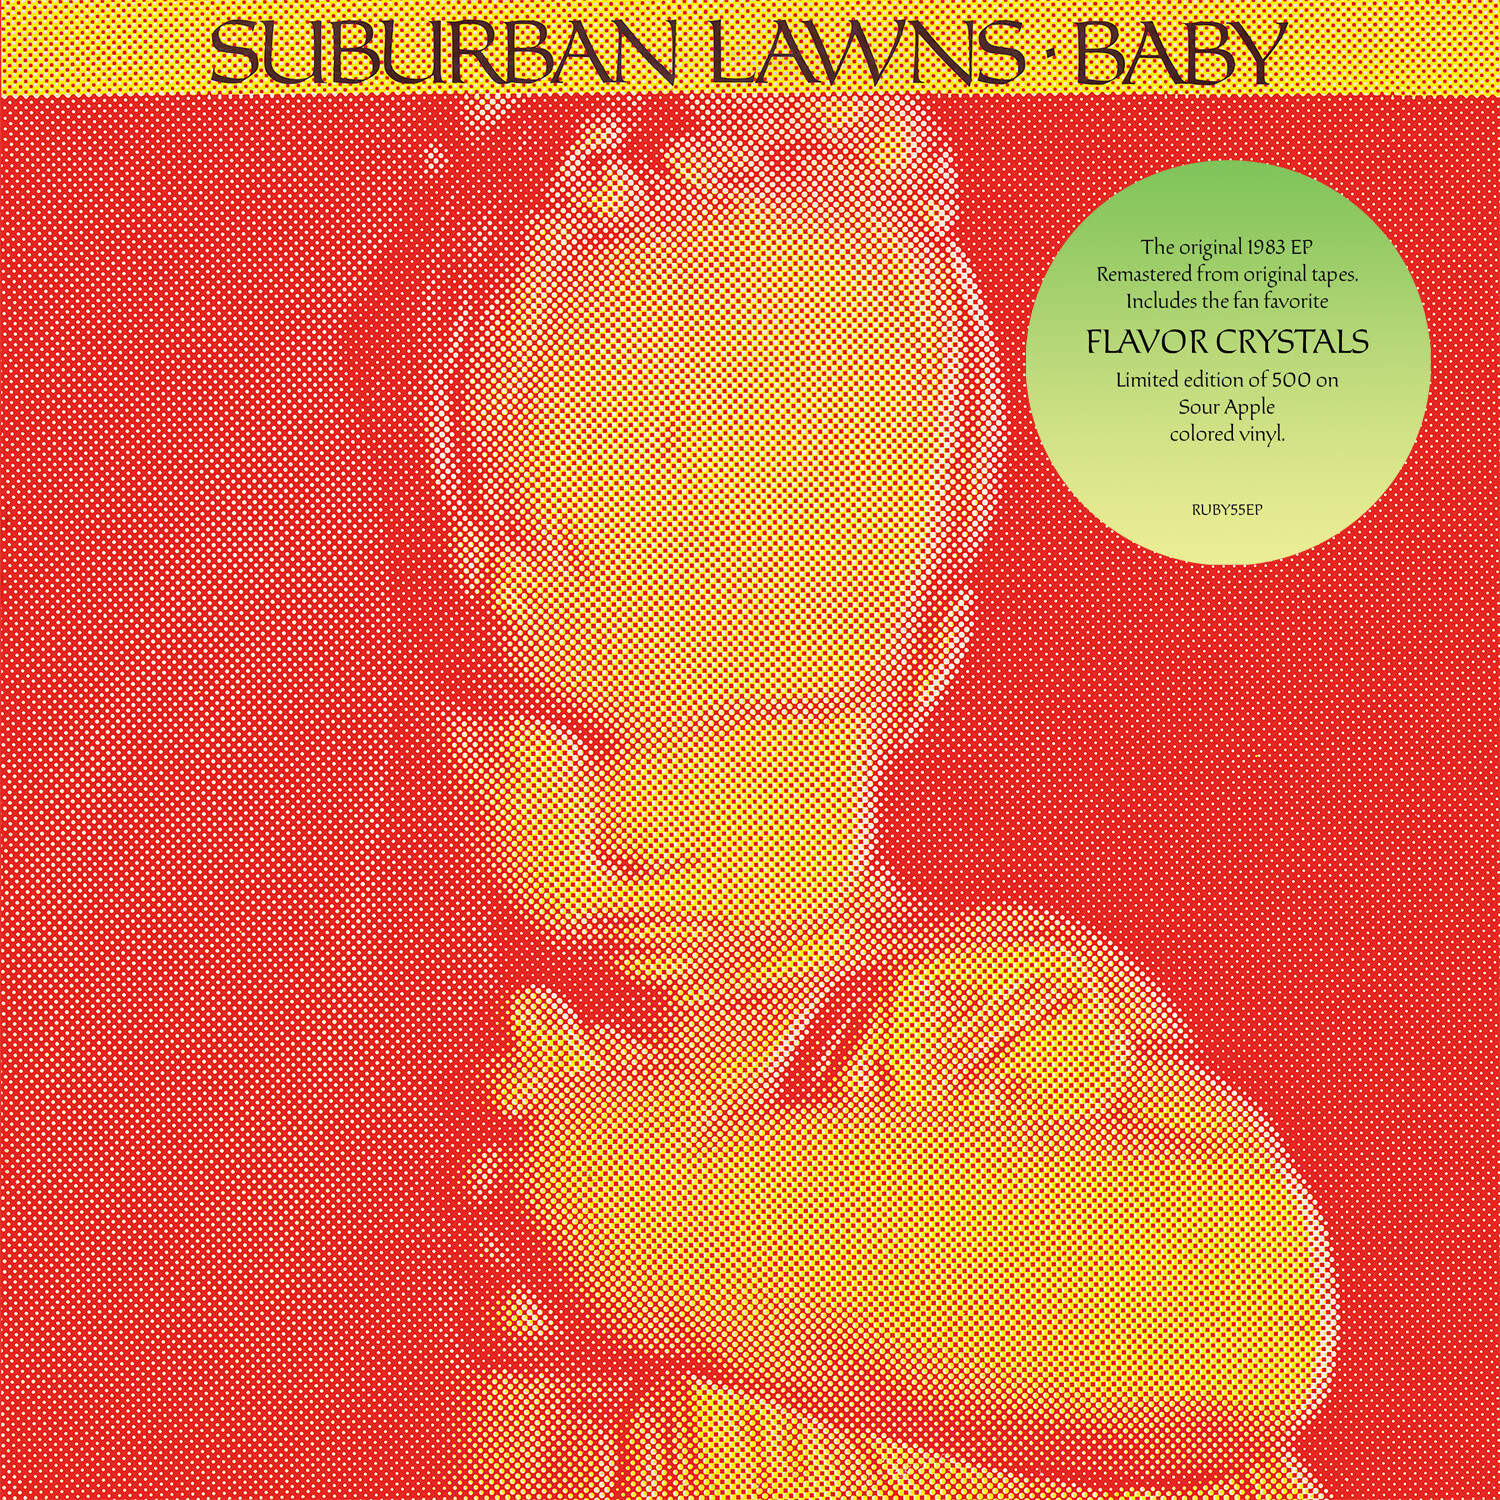 Suburban Lawns / Baby EP: Sour Apple vinyl